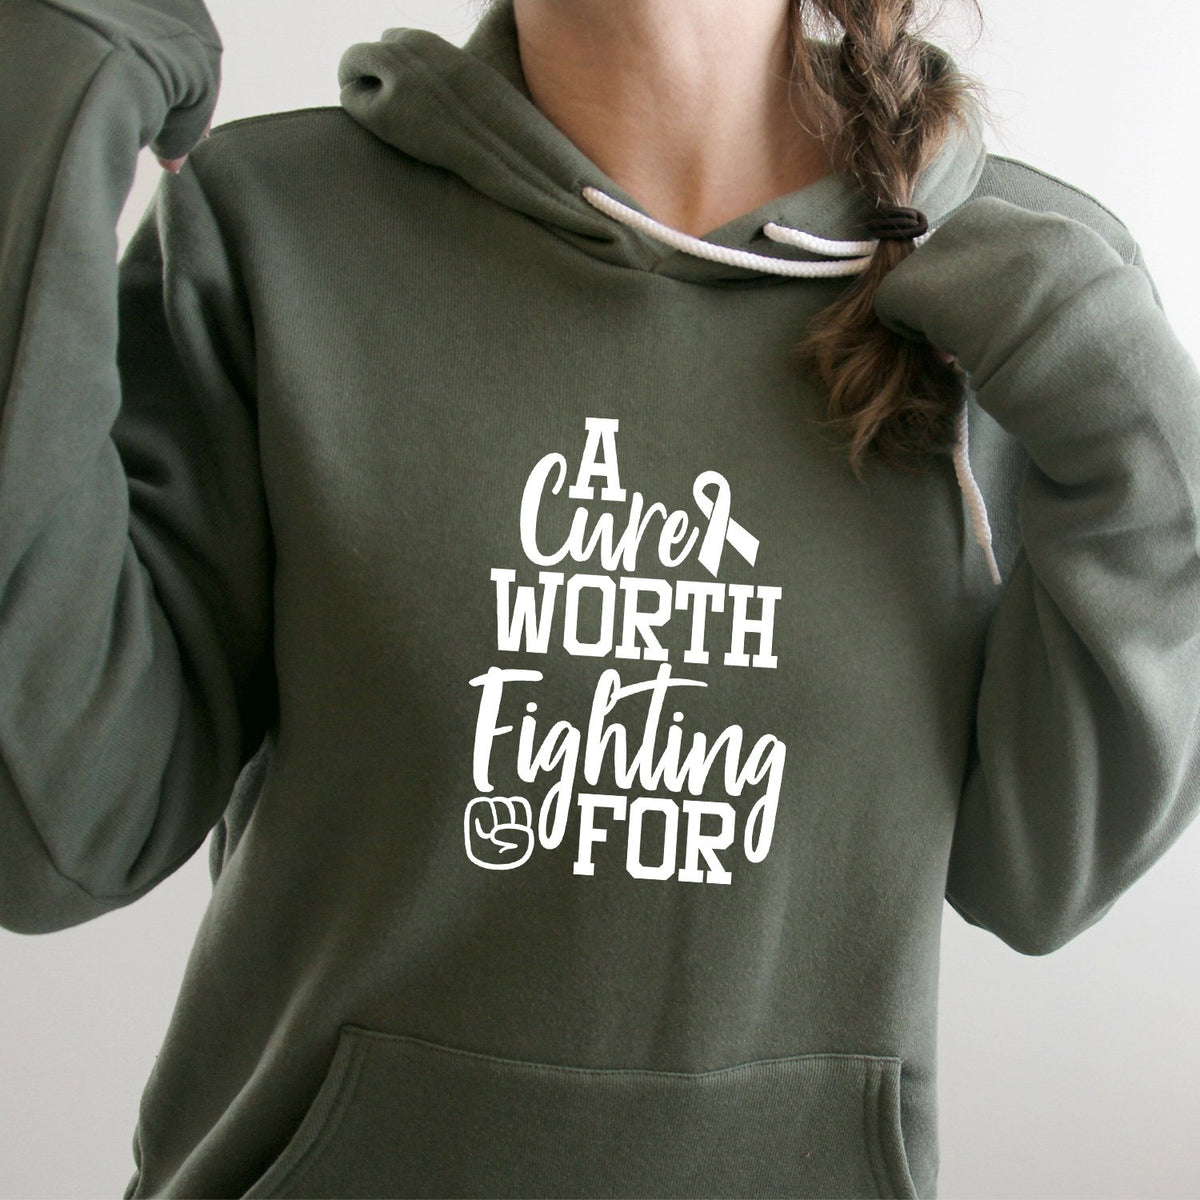 A Cure Worth Fighting For - Hoodie Sweatshirt